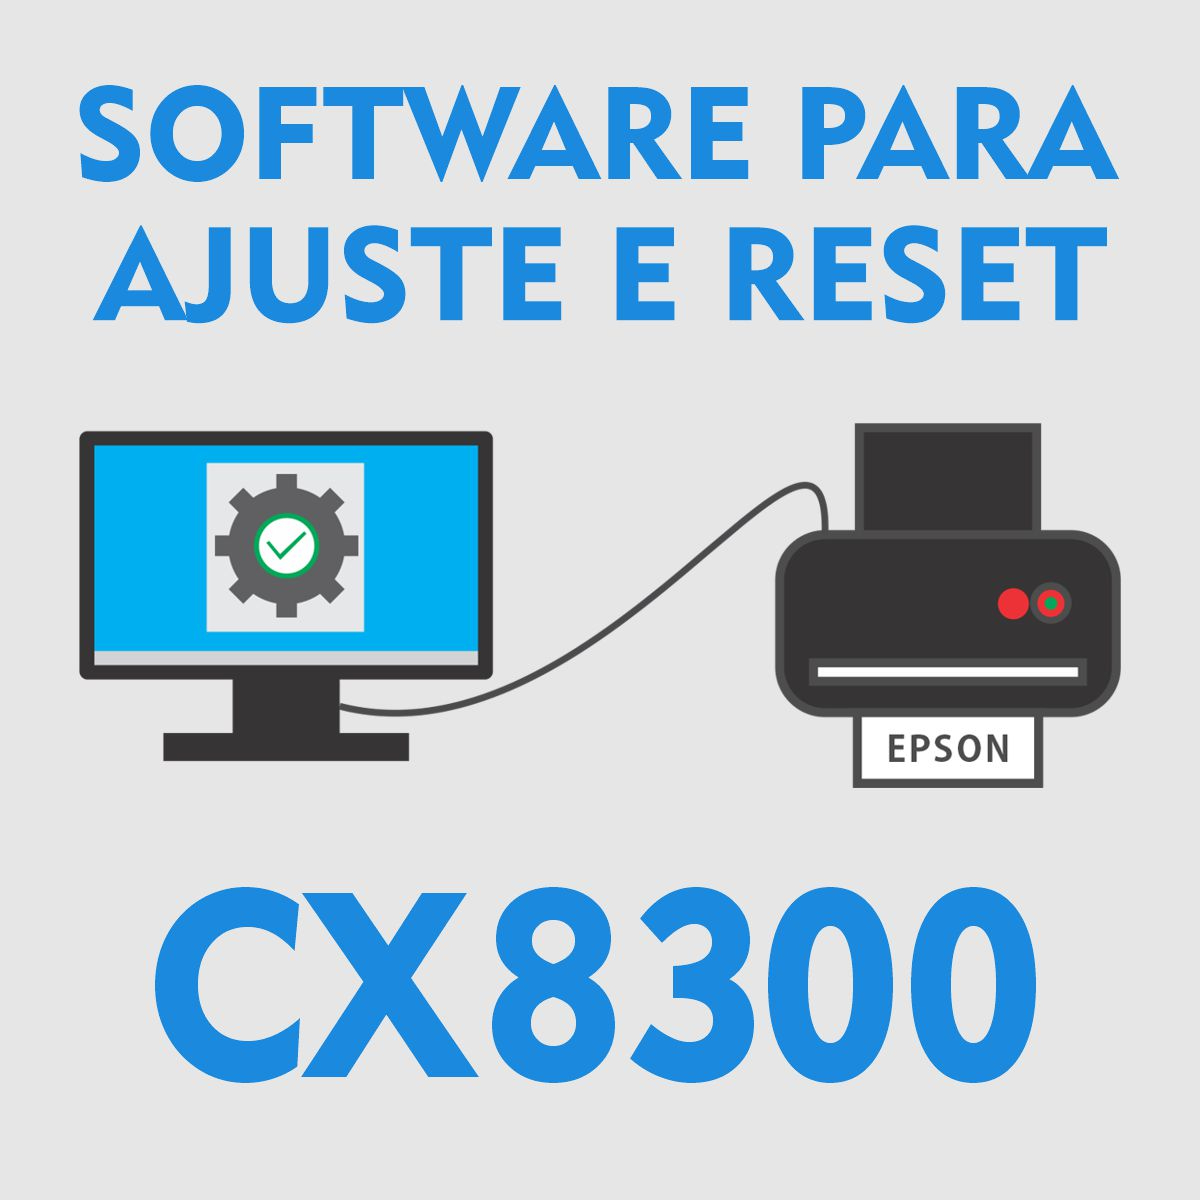 Epson CX8300 | Software para Ajustes e Reset das Almofadas